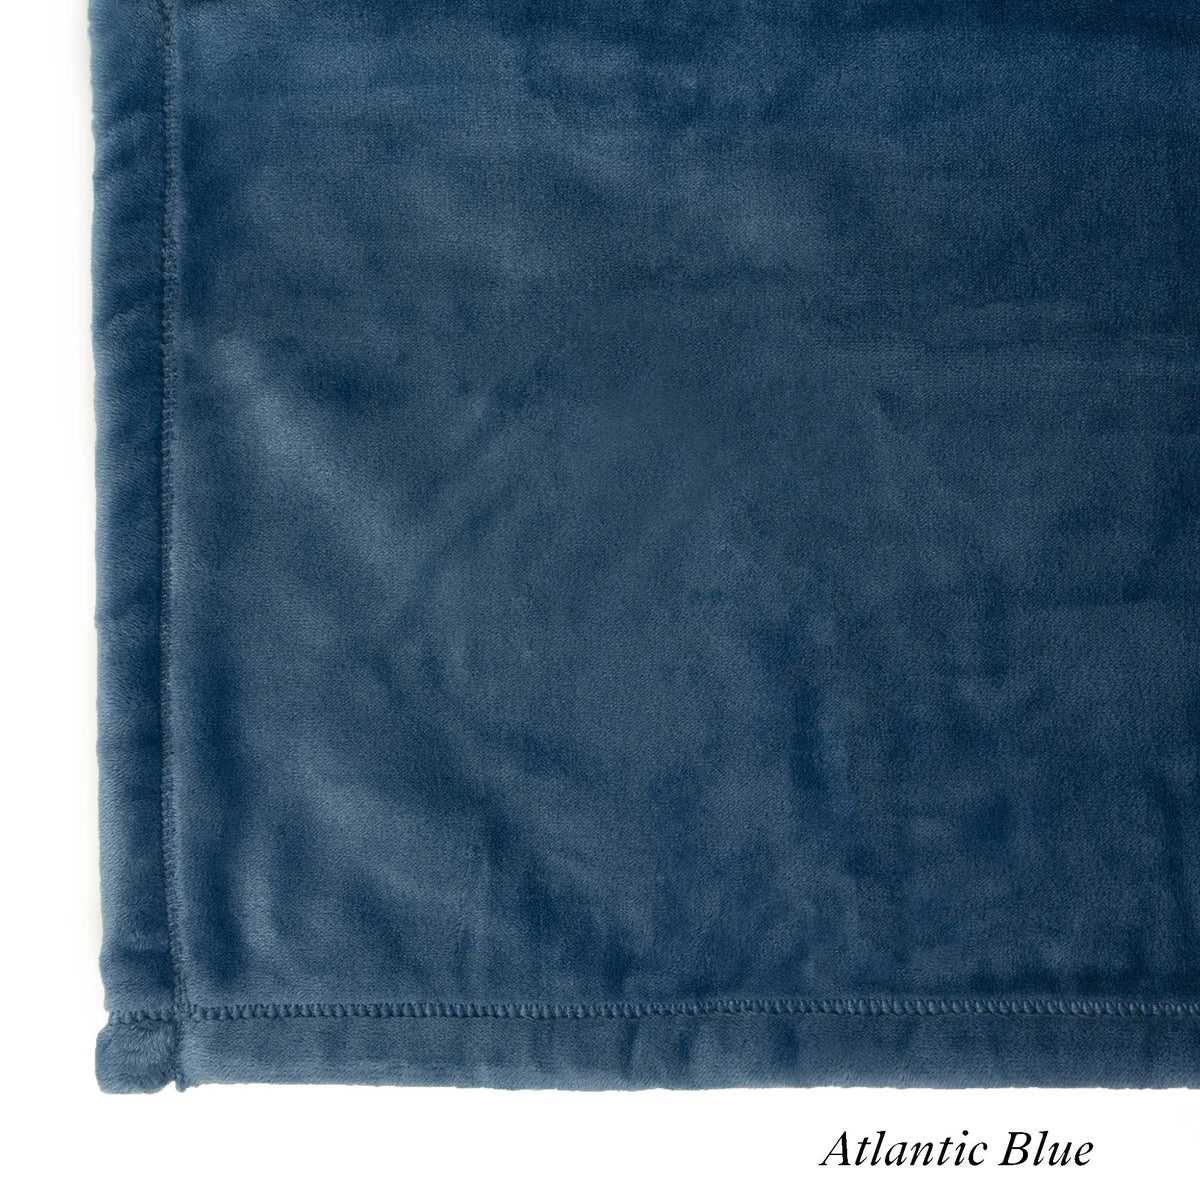 Atlantic Blue - The Best Fleece Blankets - Custom Size Luster Loft Fleece Blankets - American Blanket Company